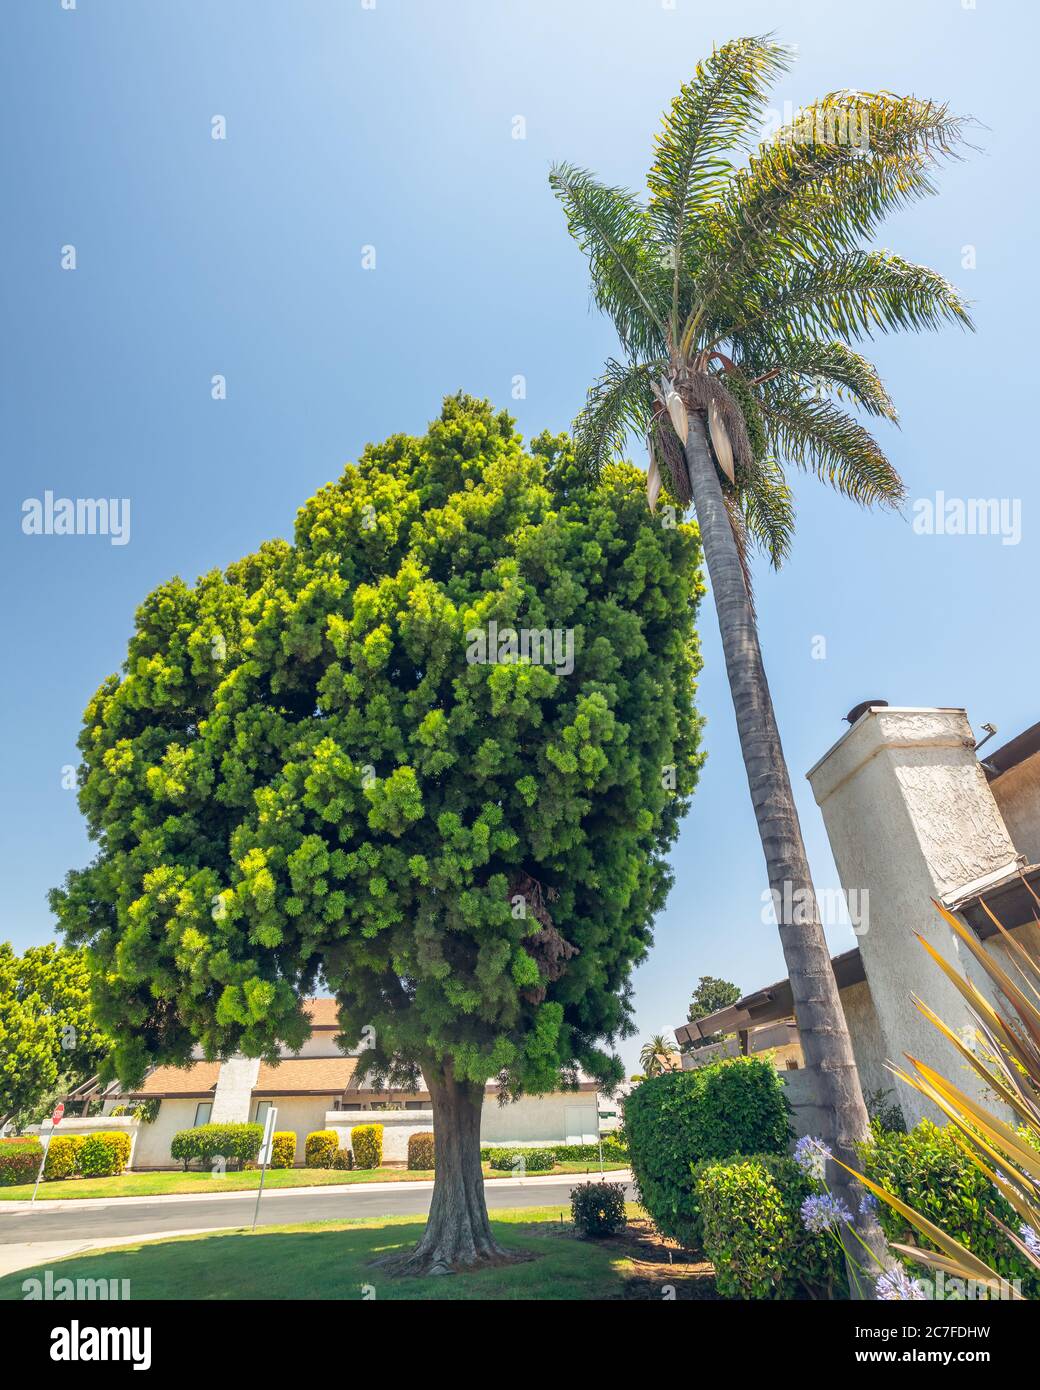 Palm tree and Podocarpus tree, an evergreen trees on the street in California Stock Photo